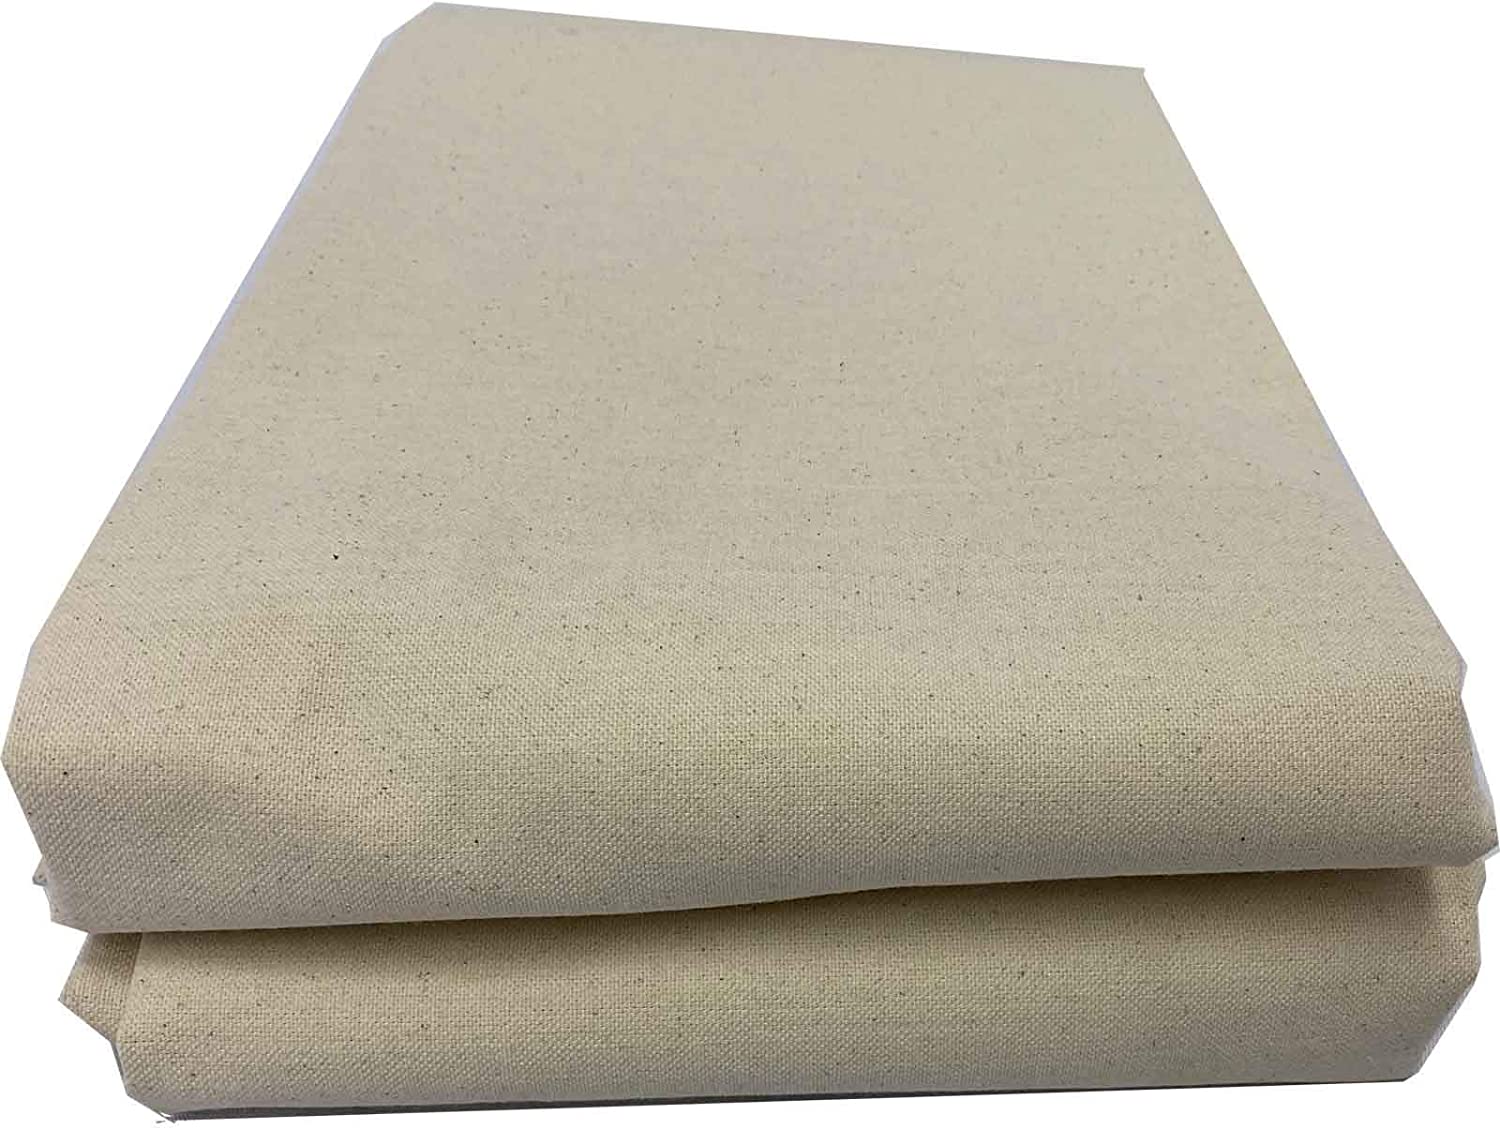 Chambray Faux Waxed Cotton Duck Canvas Fabric - Choose Half Yard or Yard